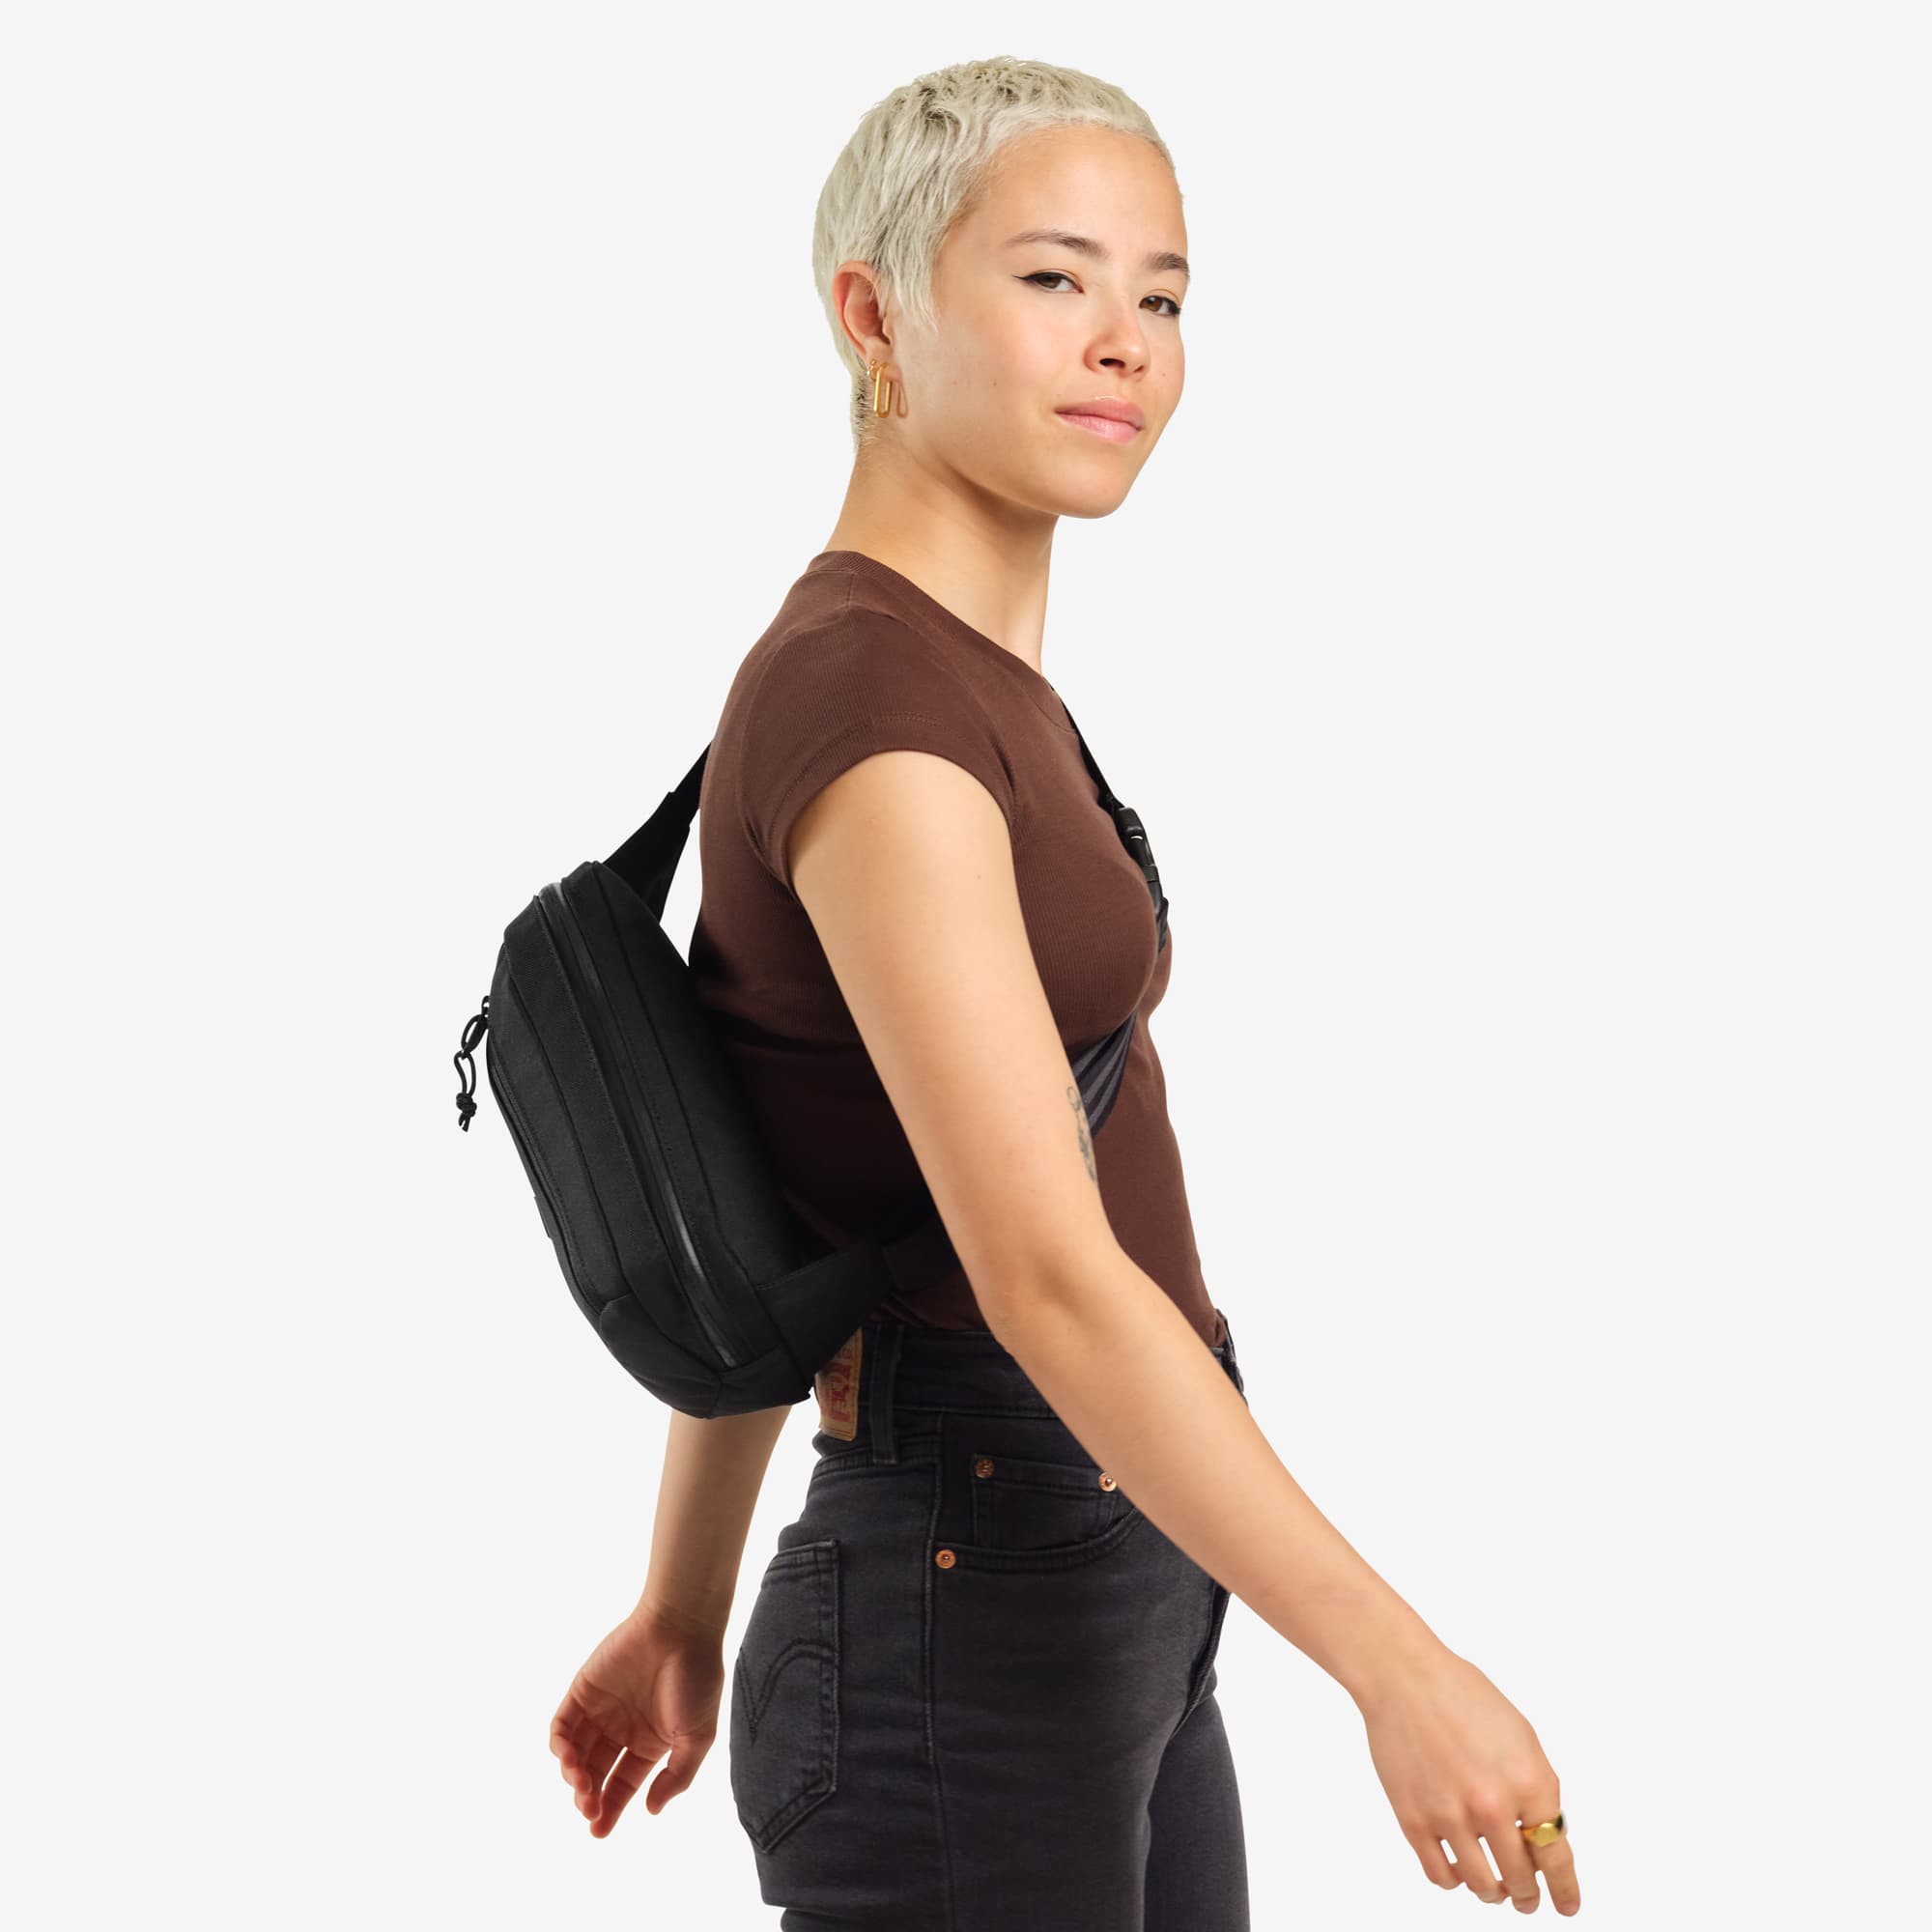 Ziptop Waistpack sling in black worn by a woman